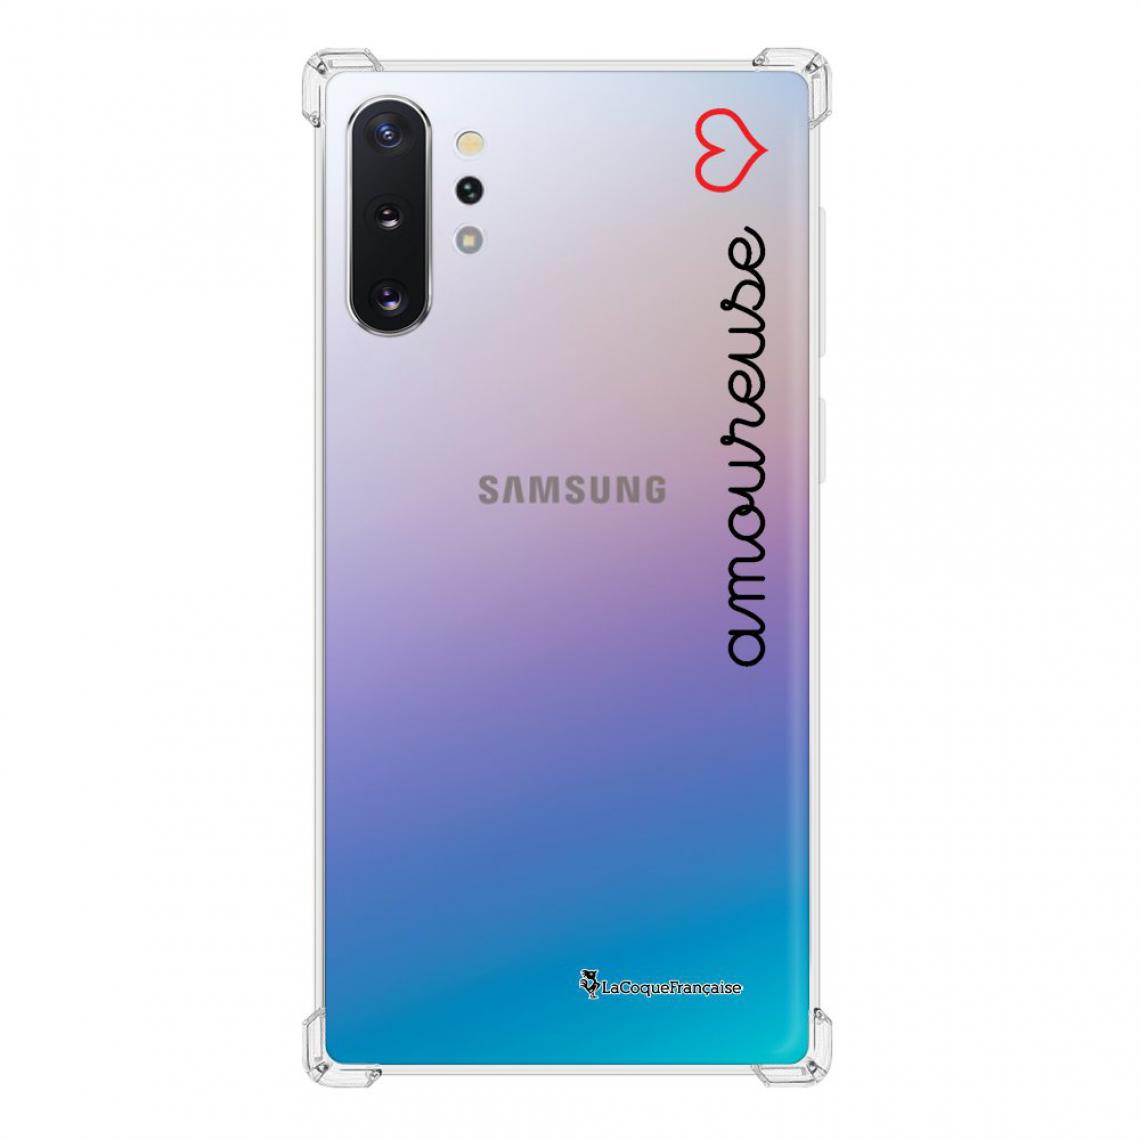 La Coque Francaise - Coque Samsung Galaxy Note 10 Plus silicone anti-choc souple angles renforcés transparente - Coque, étui smartphone